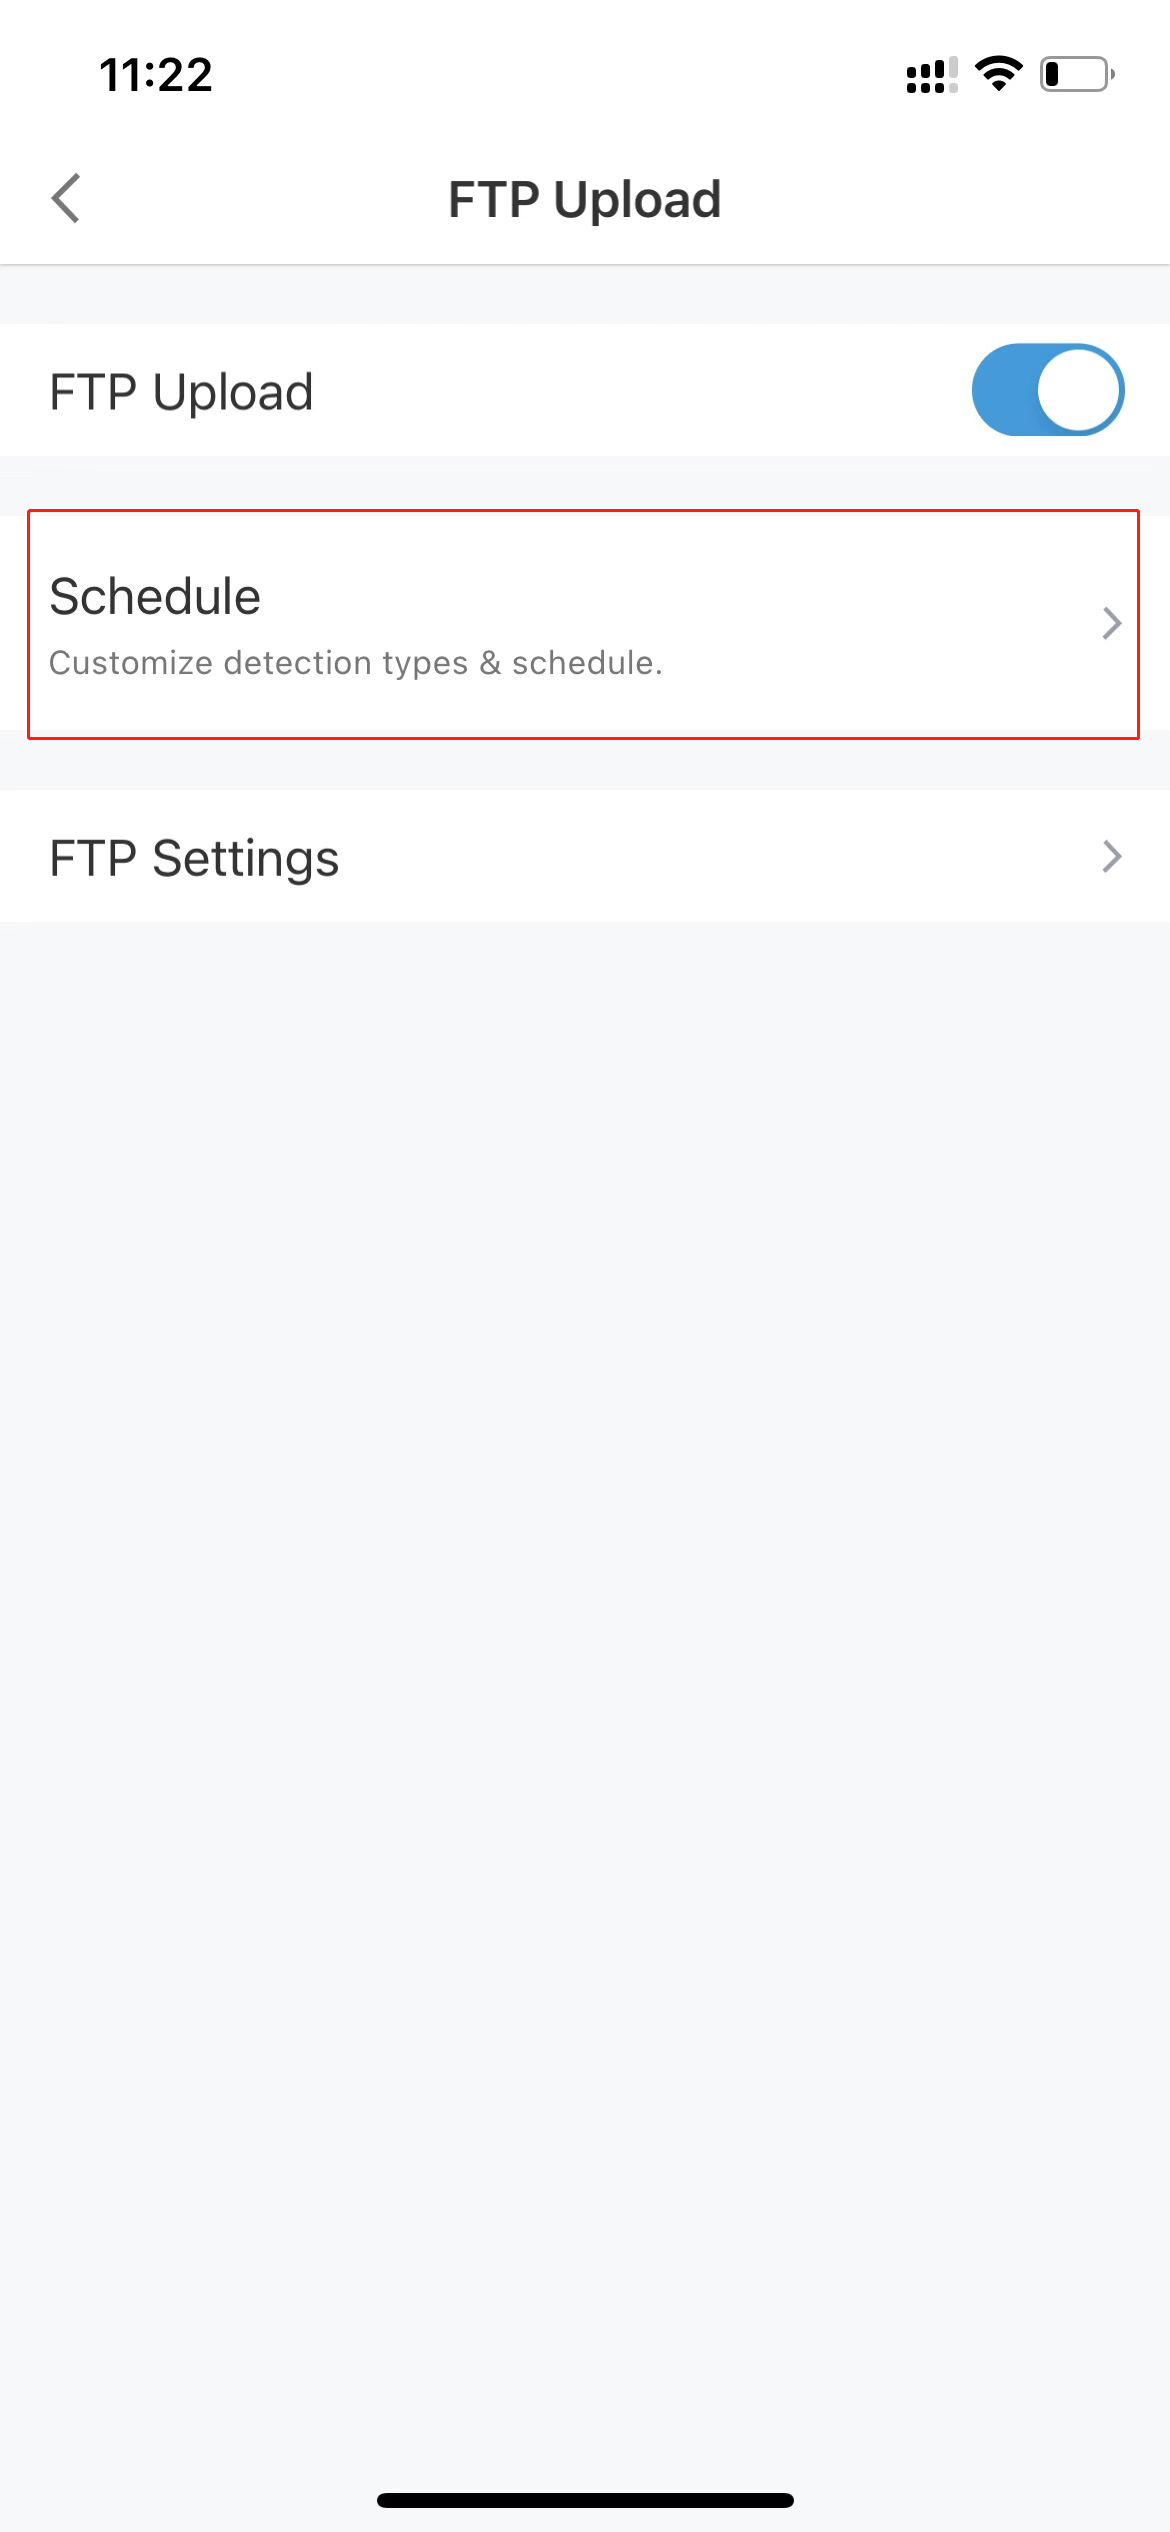 FTP schedule option